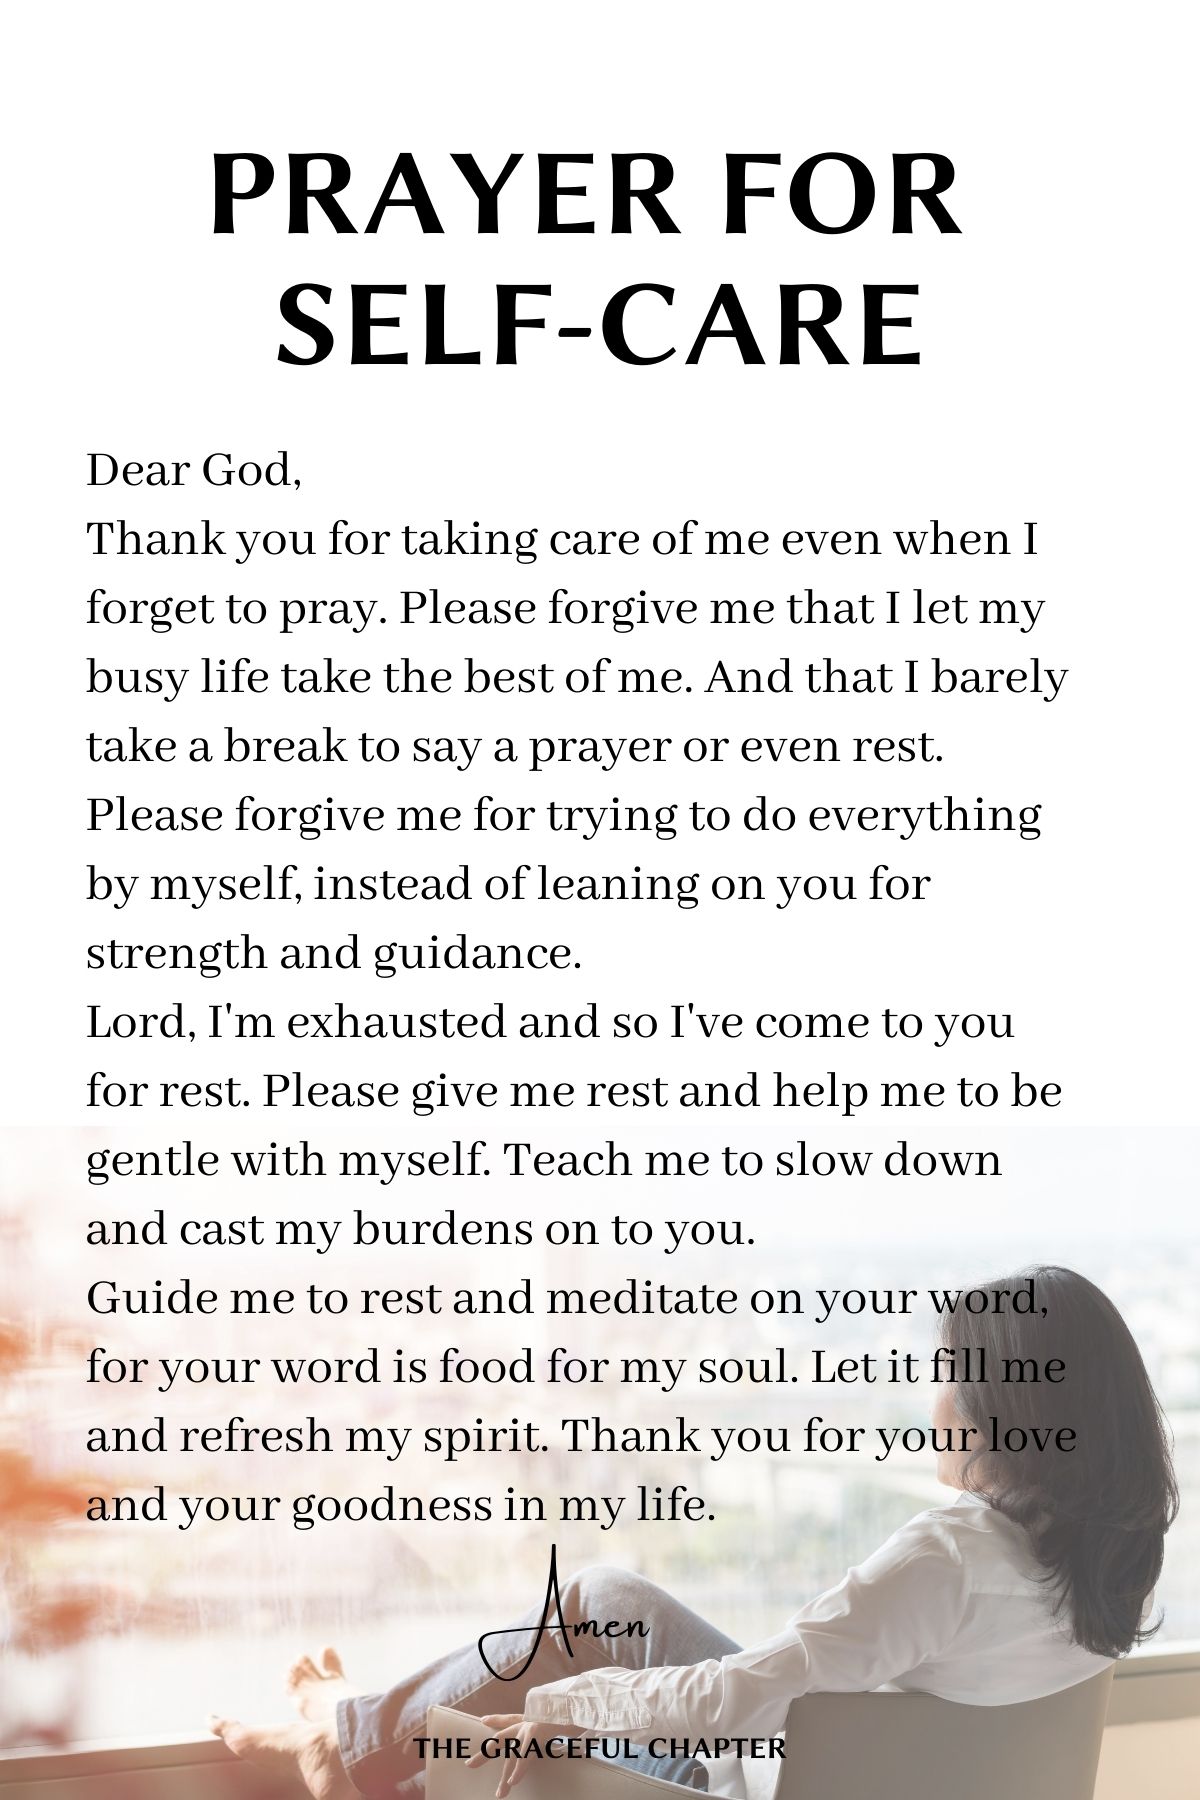 Prayer for self-care